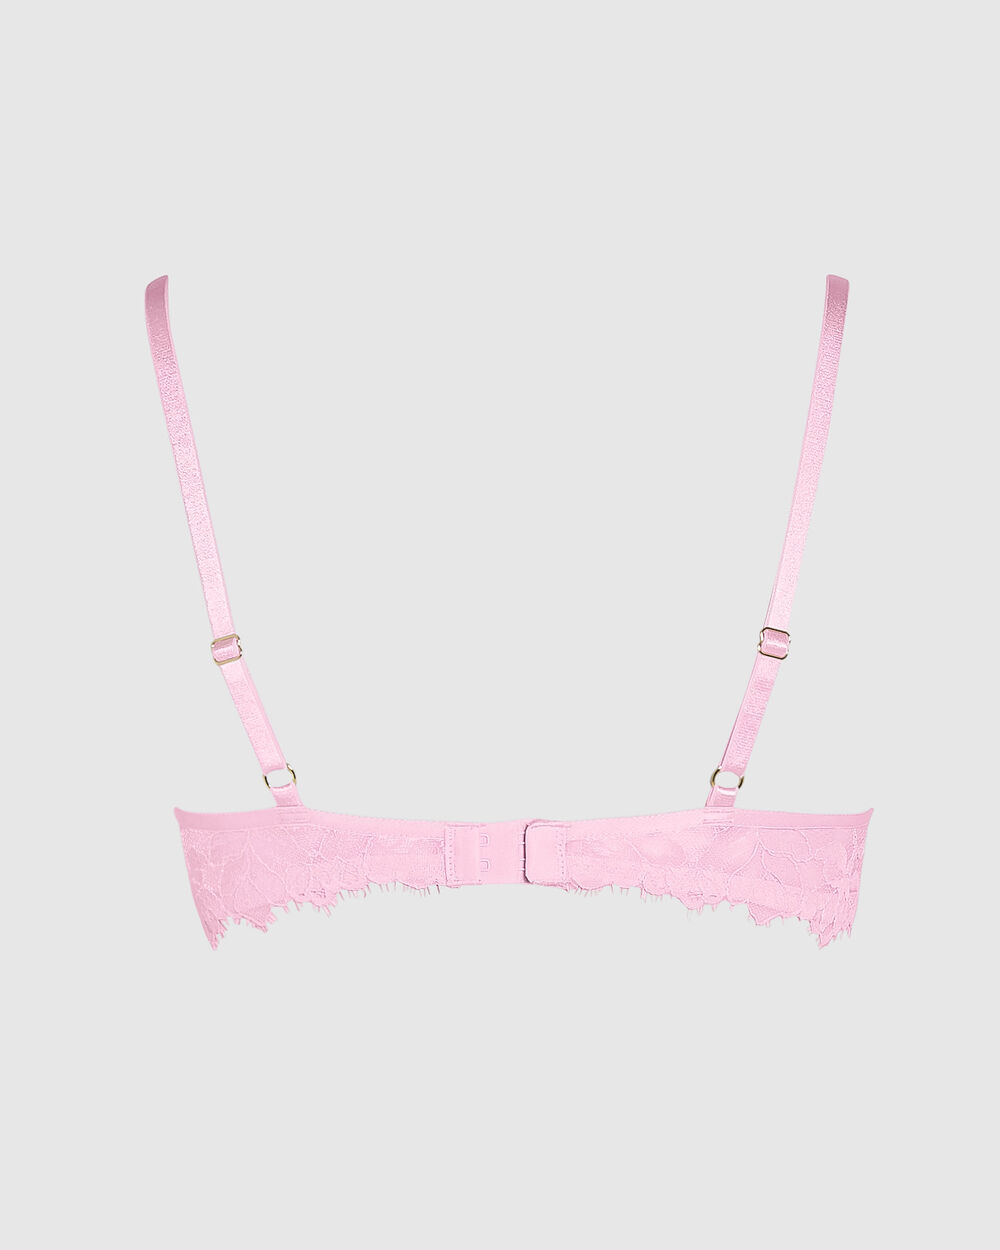 Women's Fishnet Lace Unlined Bra - Auden™ Pink 36c : Target